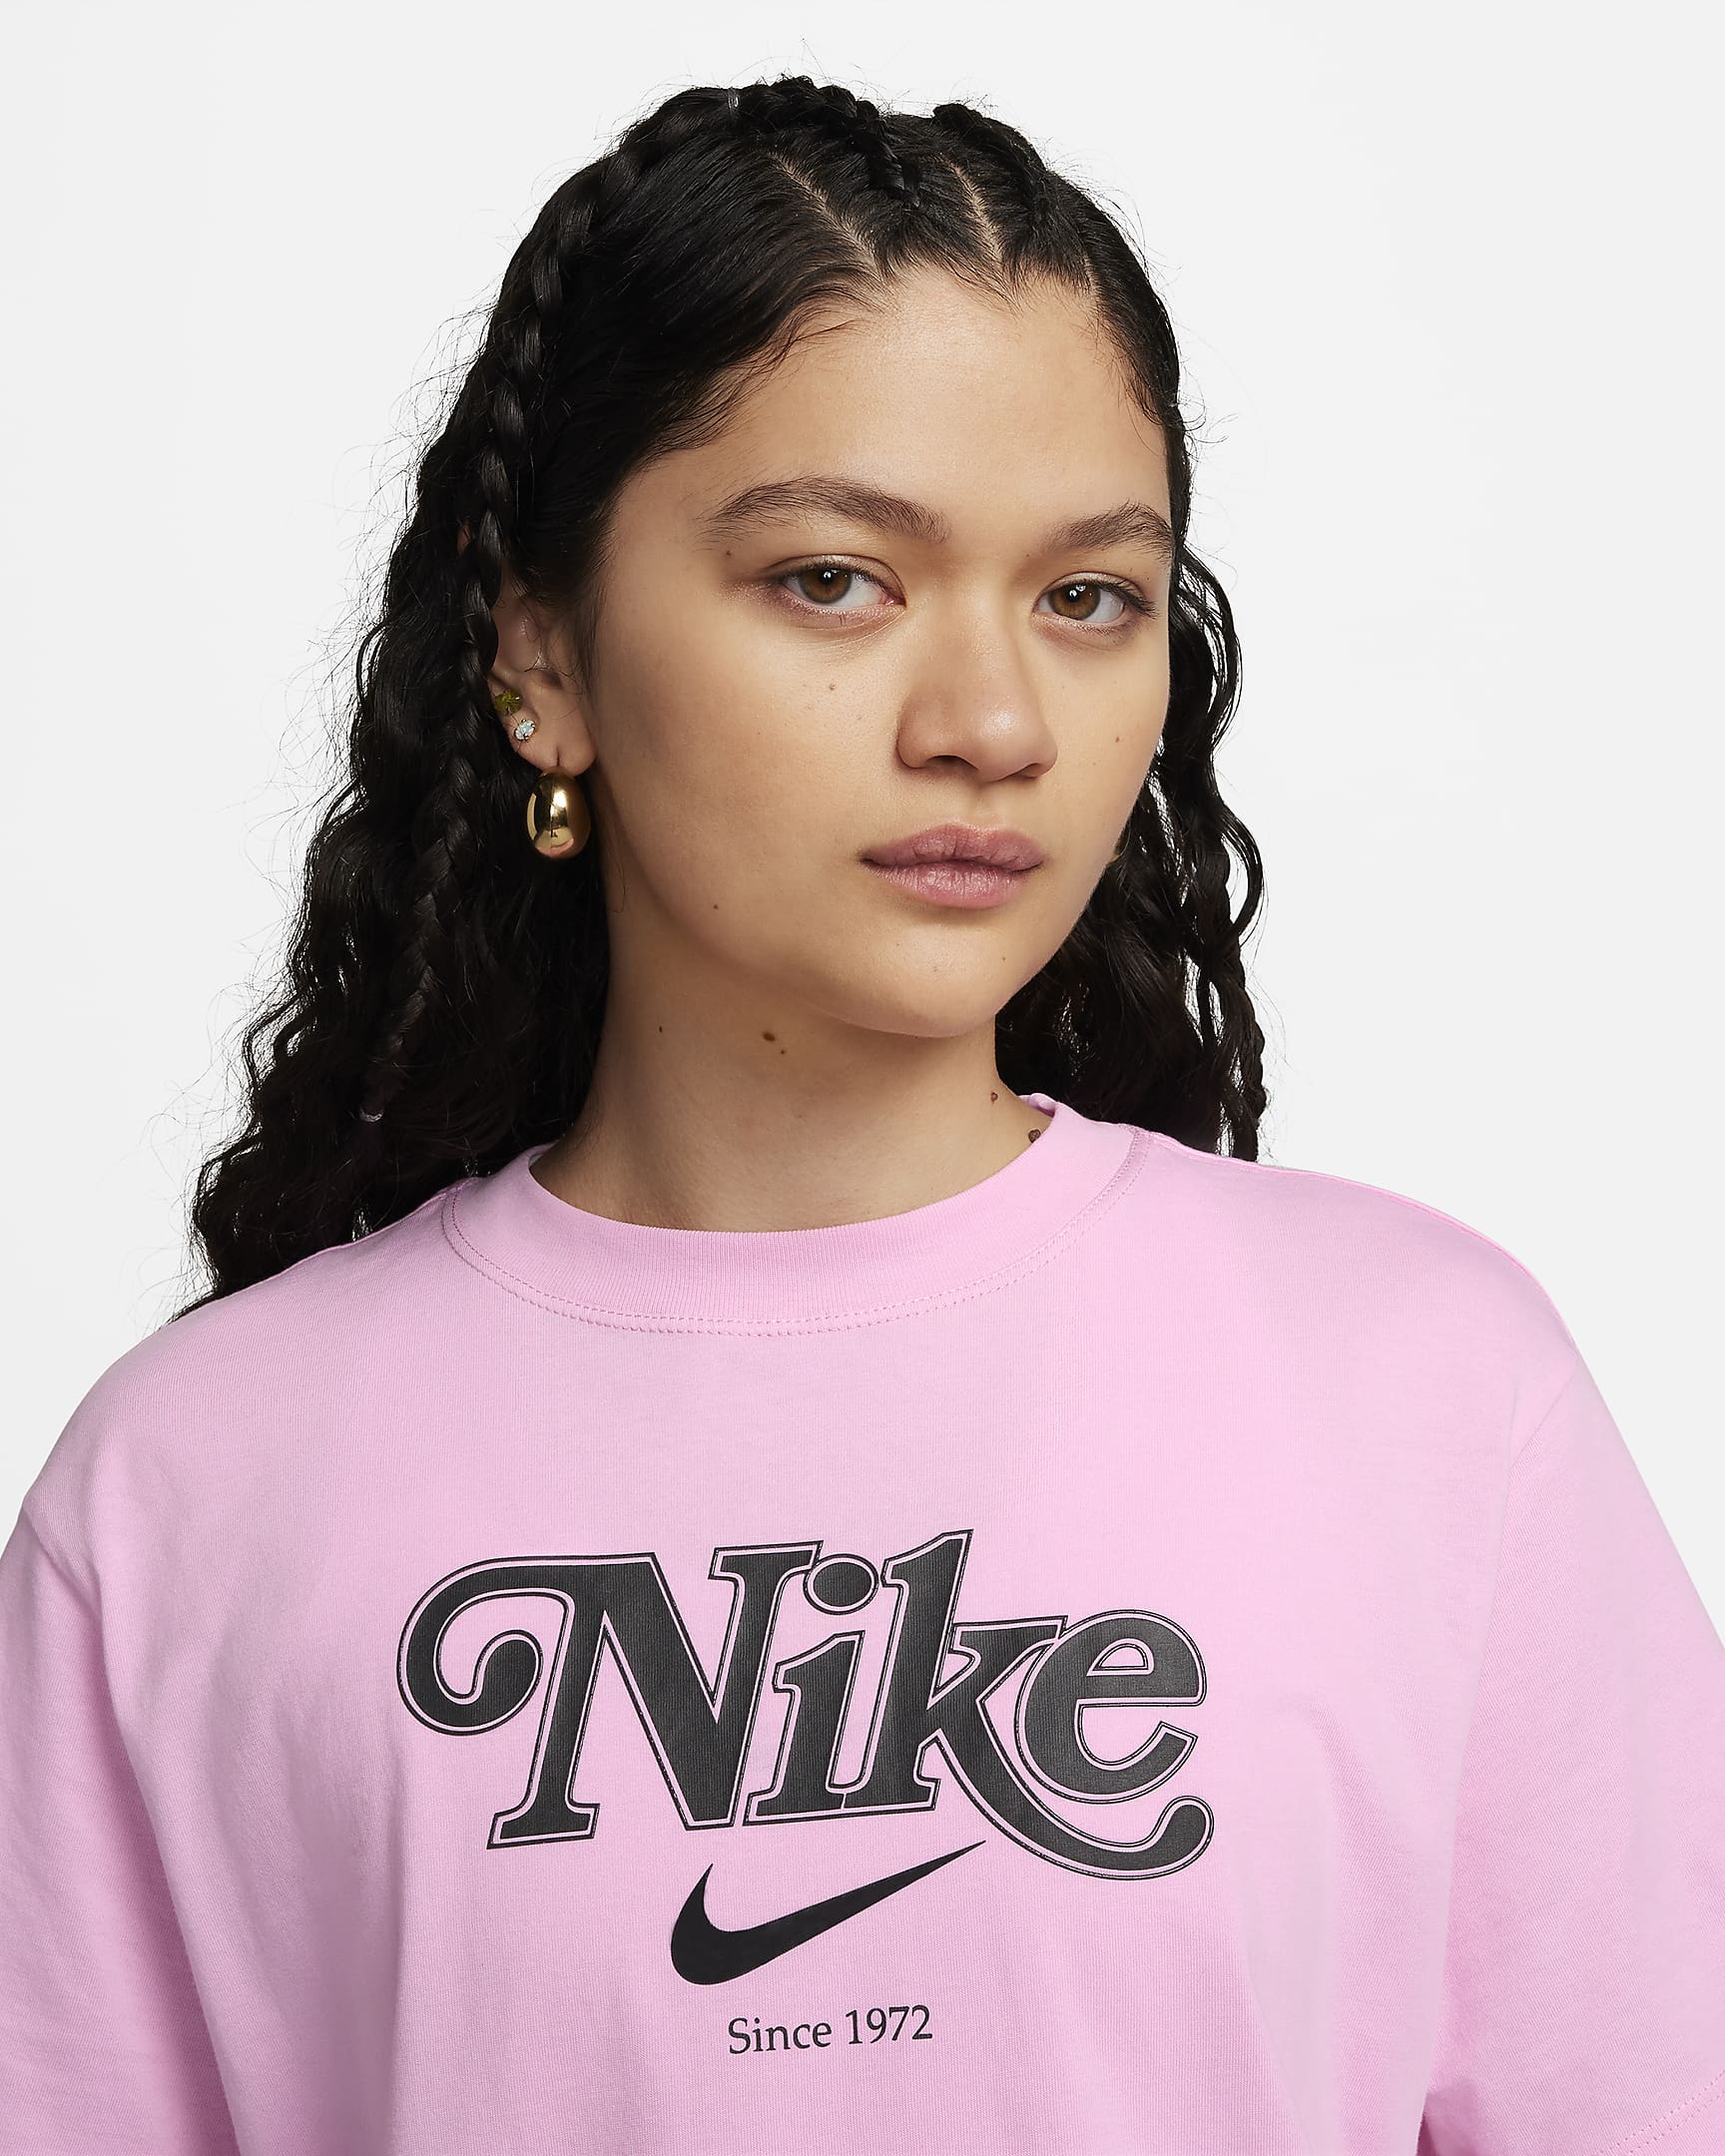 Nike Sportswear Women's T-Shirt. Nike AT